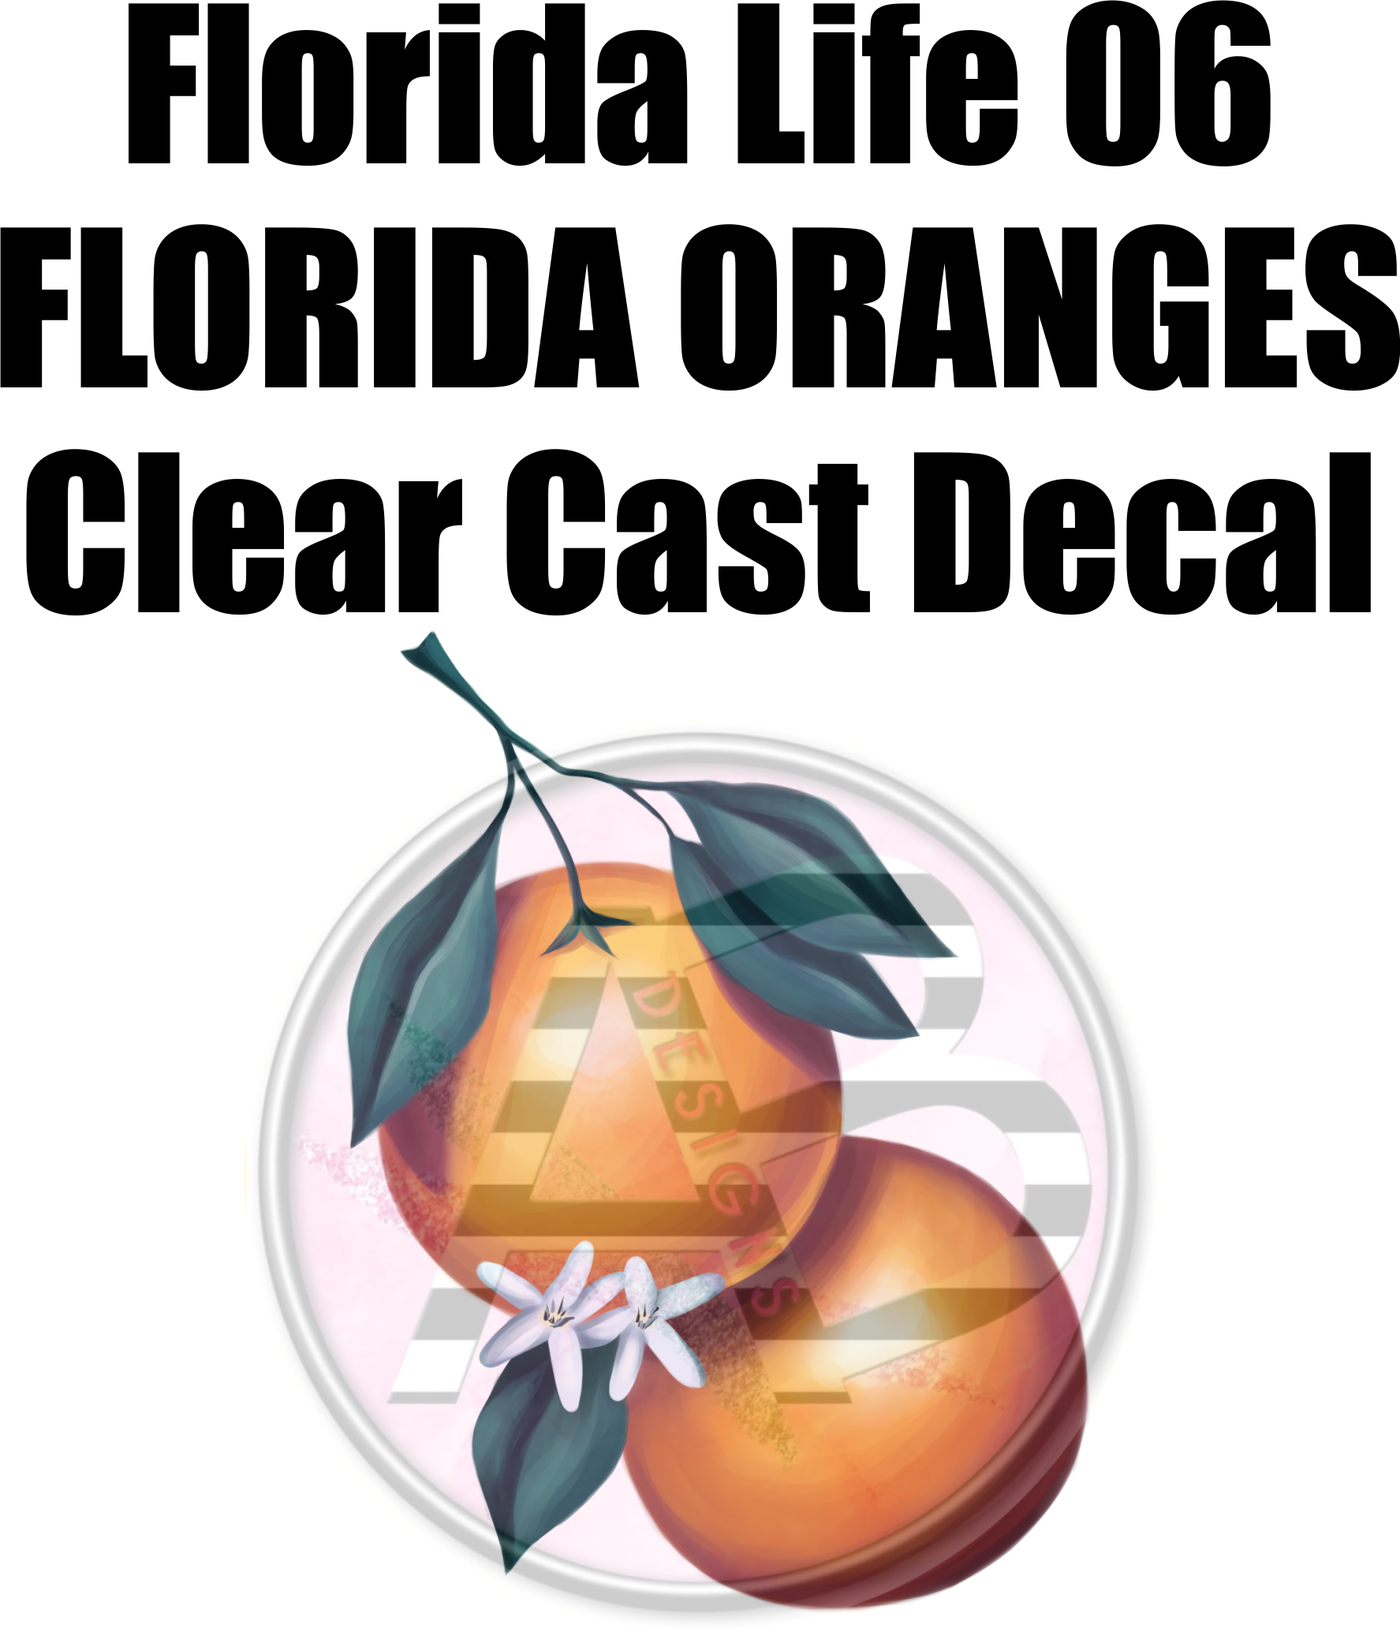 Florida Life 06 Florida Oranges - Clear Cast Decal